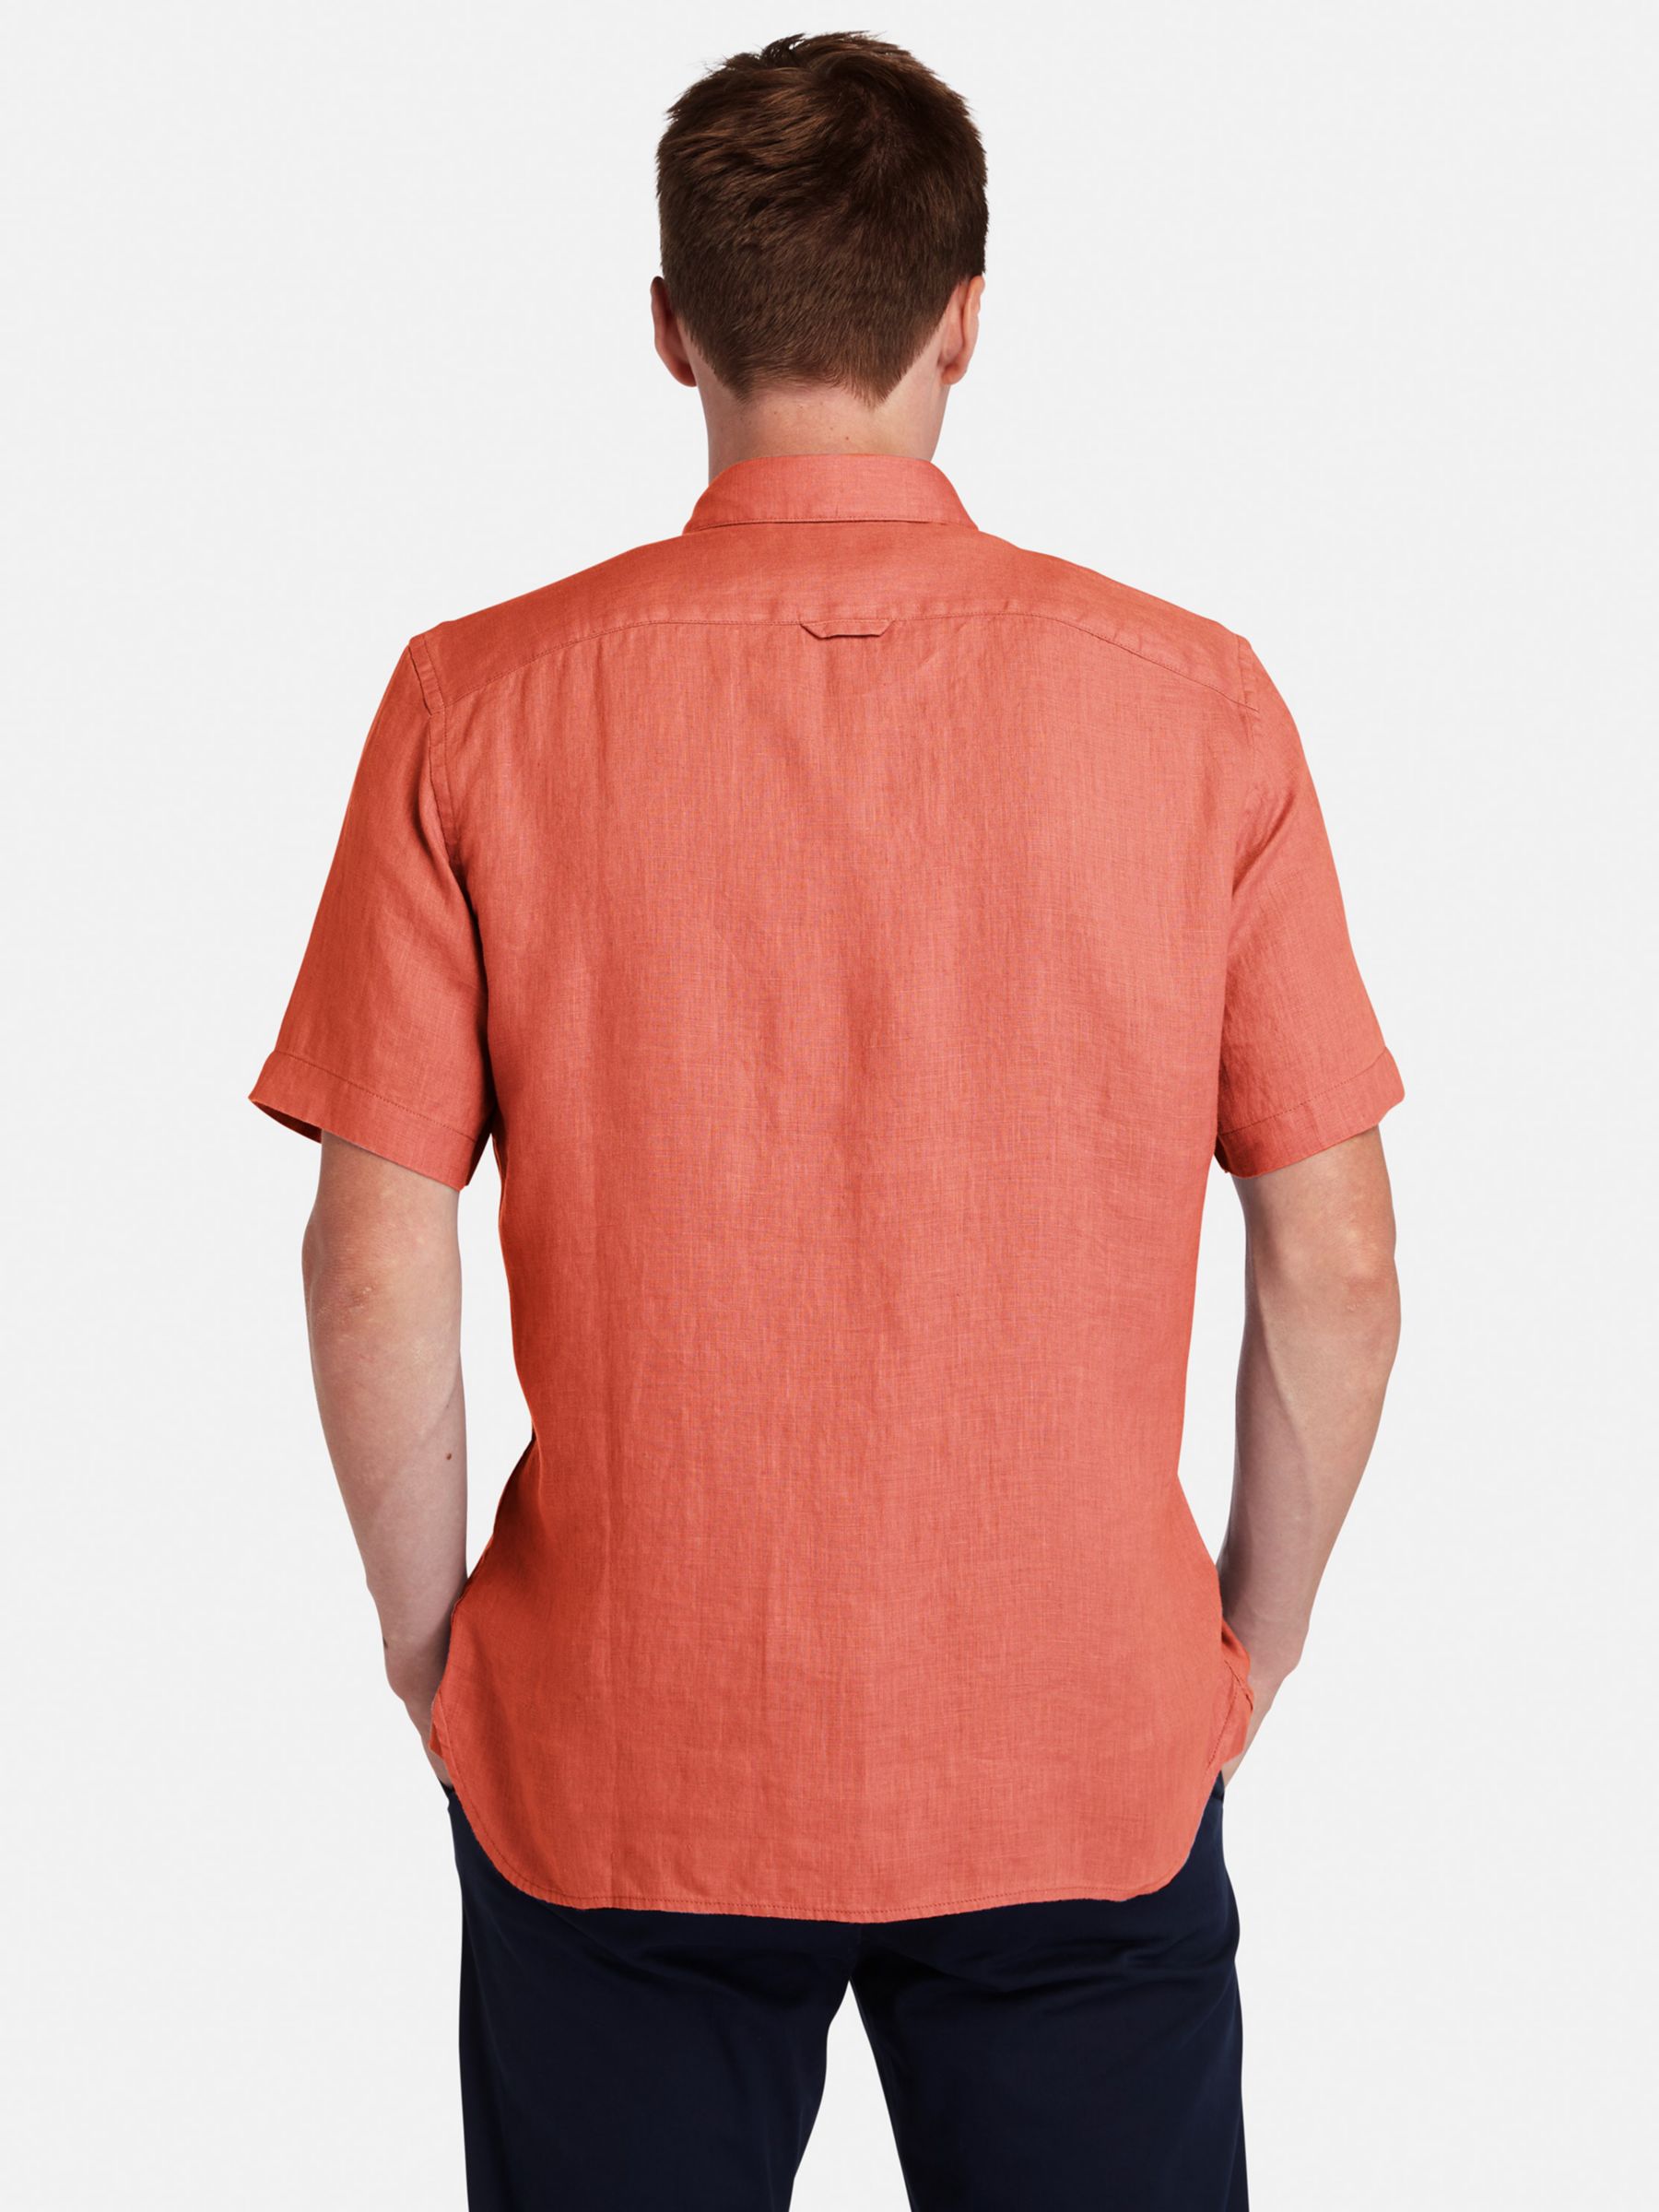 Timberland Linen Slim Fit Short Sleeve Shirt, Burnt Sienna, S